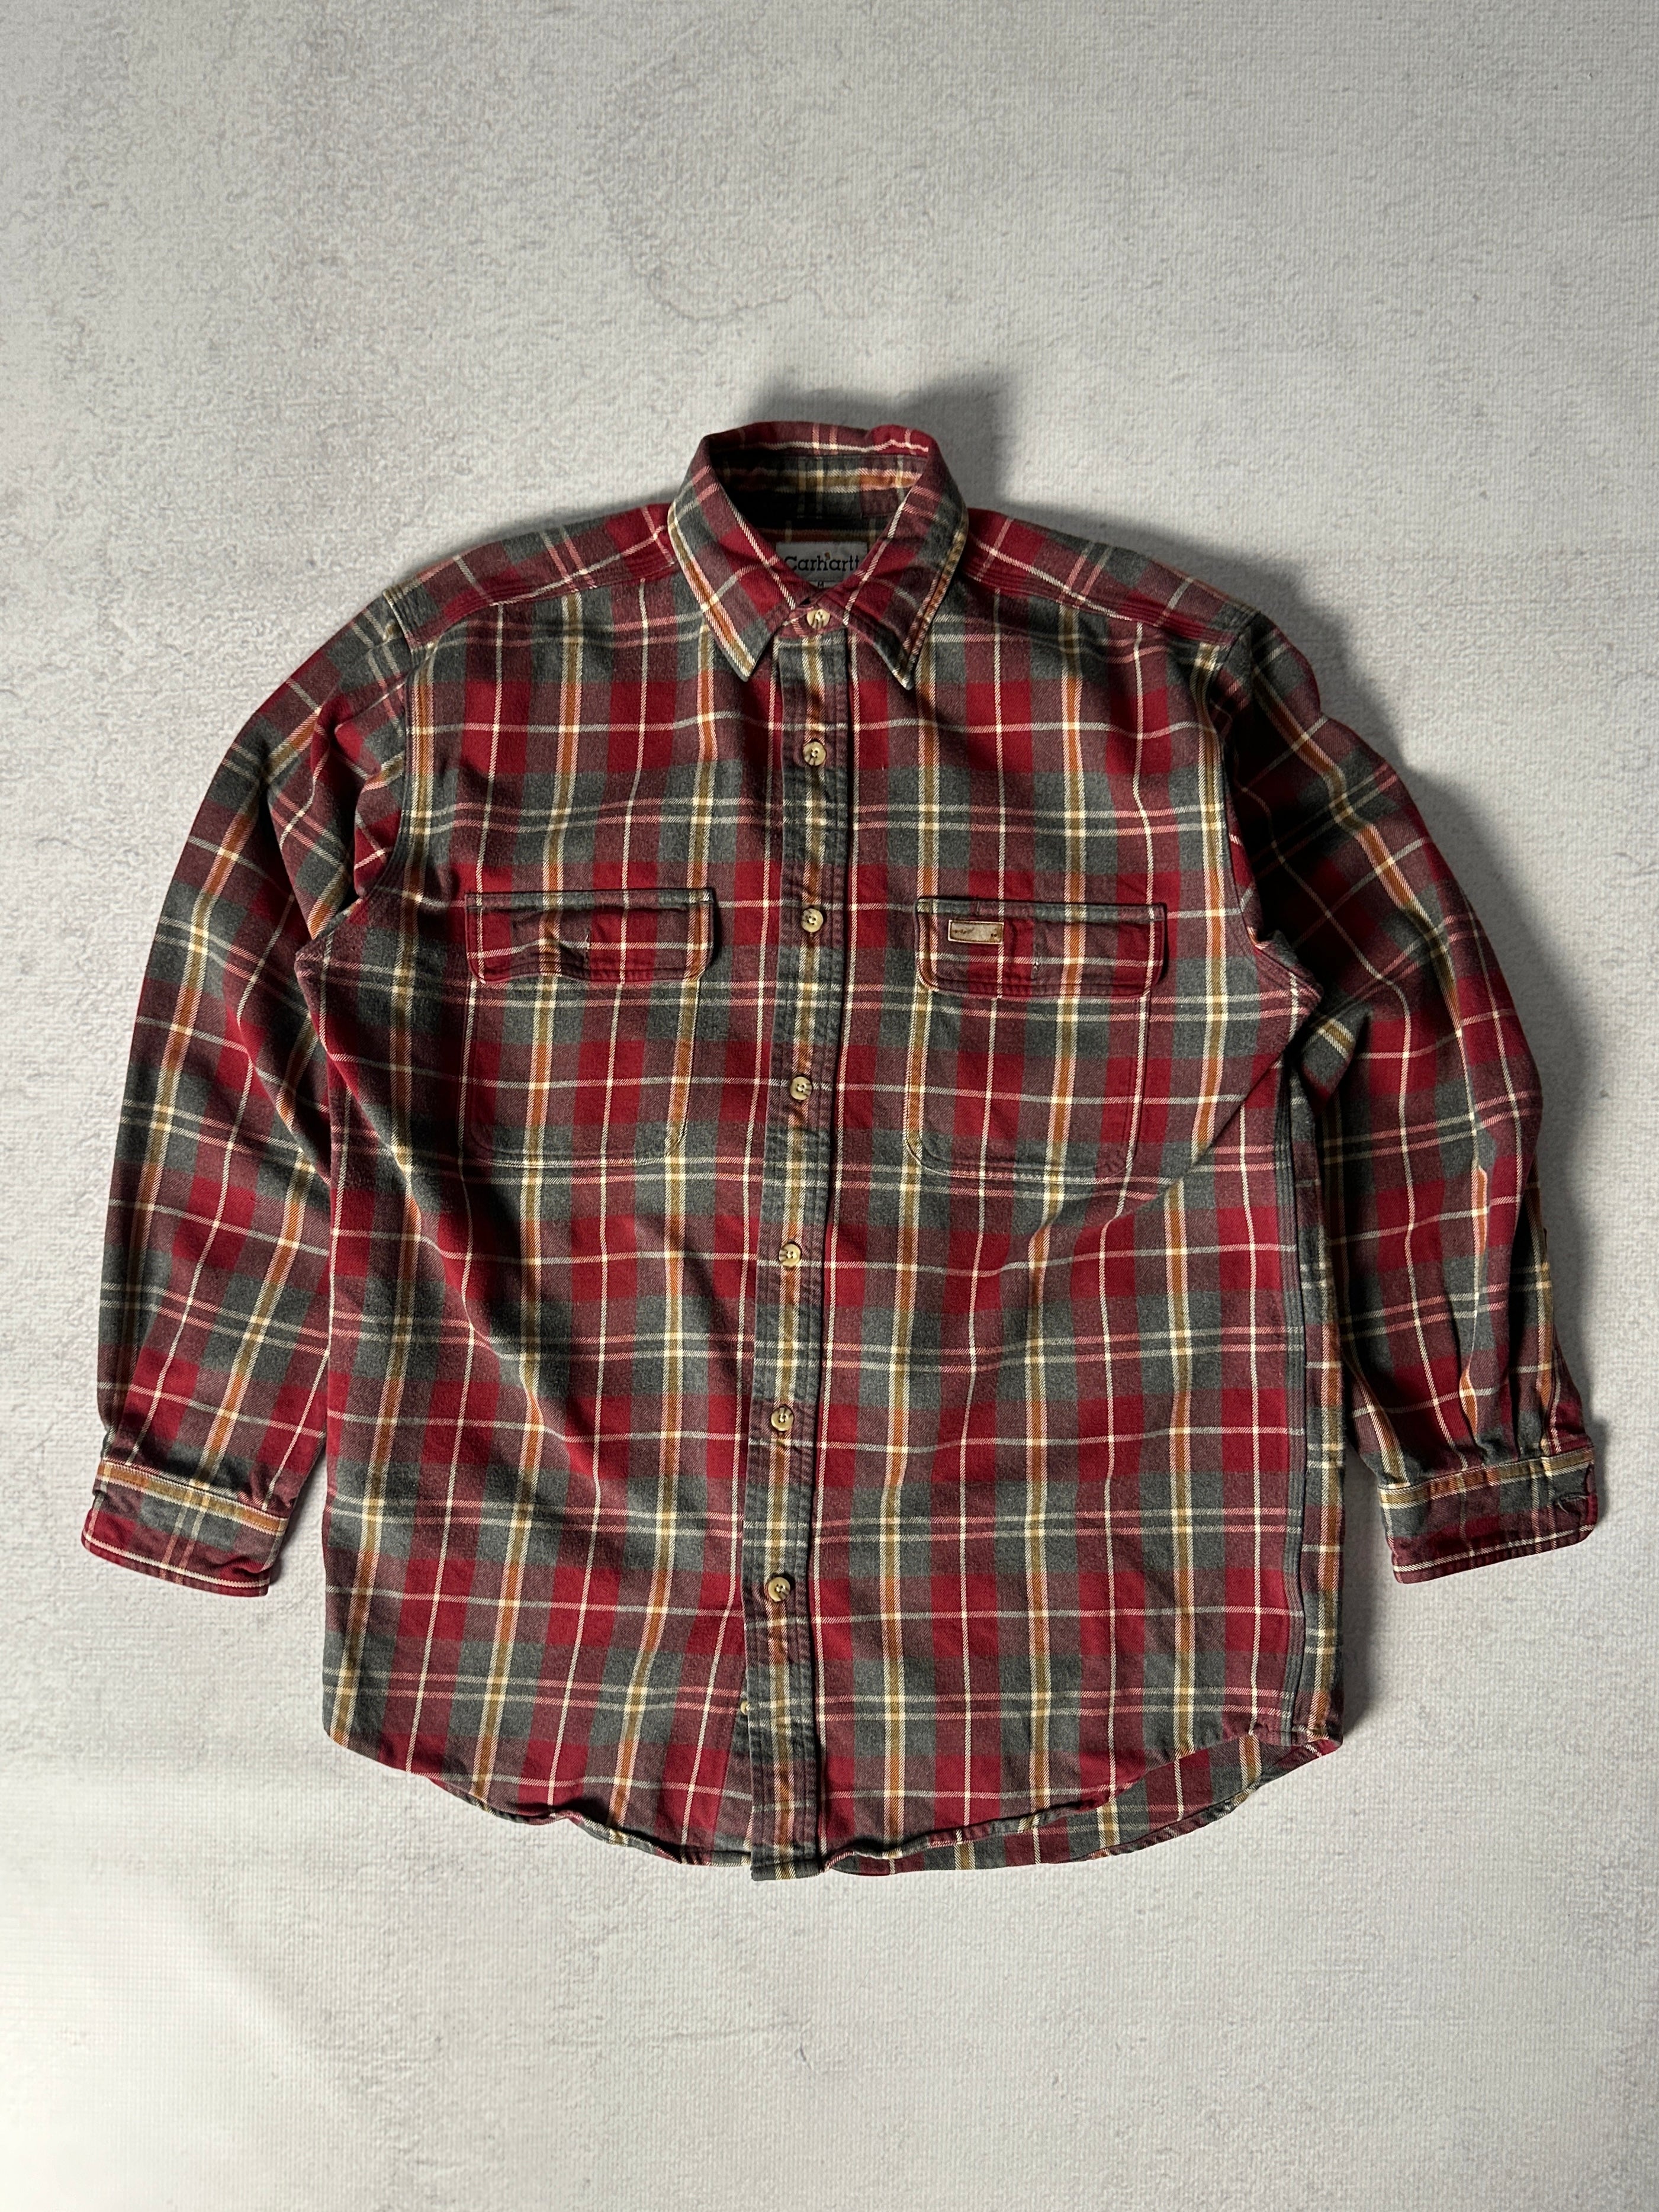 Vintage Carhartt Flannel Buttoned Shirt - Men's Large